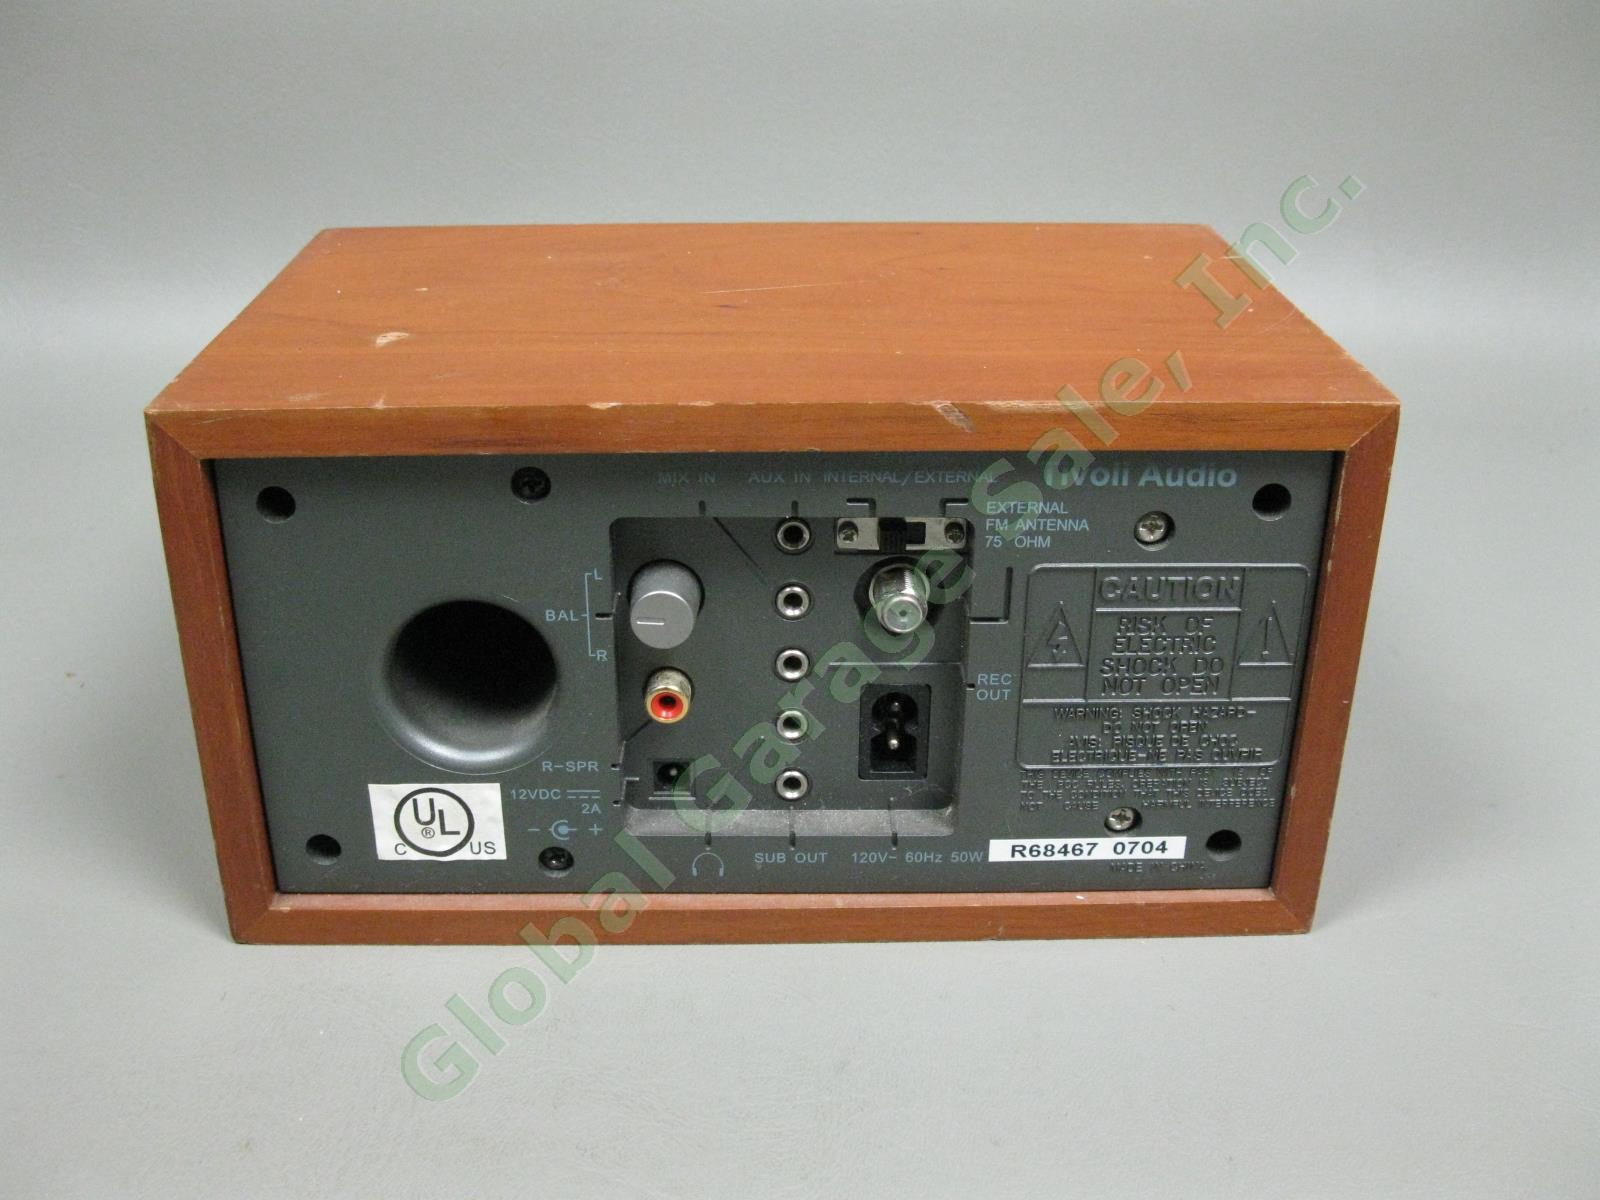 Tivoli Audio Model Two Henry Kloss AM/FM Radio Subwoofer Speakers Tested IWC NR 3